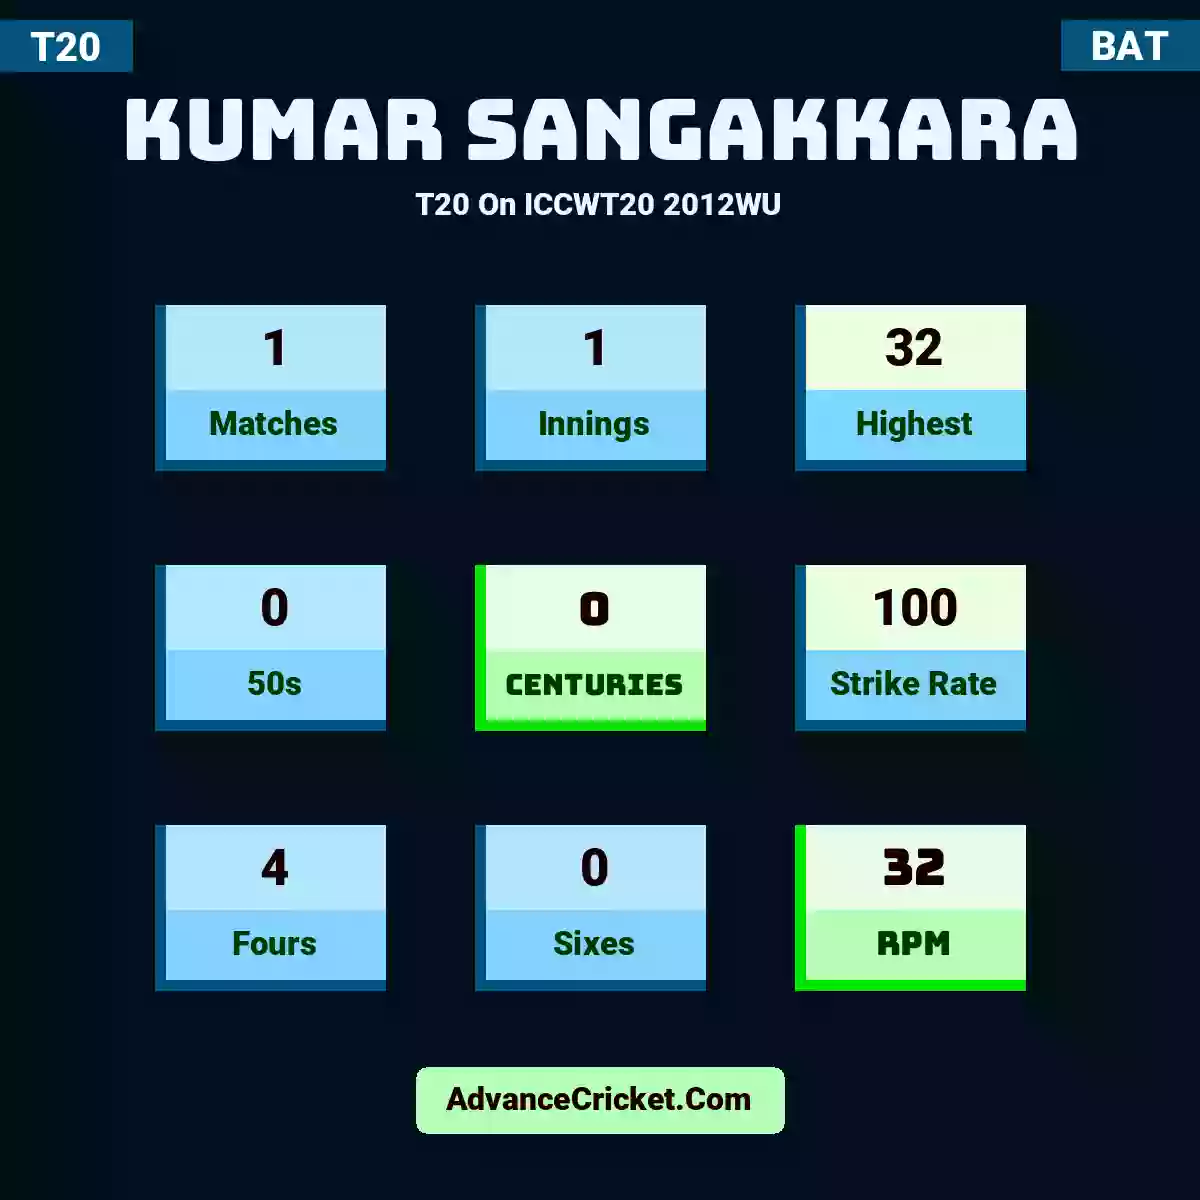 Kumar Sangakkara T20  On ICCWT20 2012WU, Kumar Sangakkara played 1 matches, scored 32 runs as highest, 0 half-centuries, and 0 centuries, with a strike rate of 100. K.Sangakkara hit 4 fours and 0 sixes, with an RPM of 32.